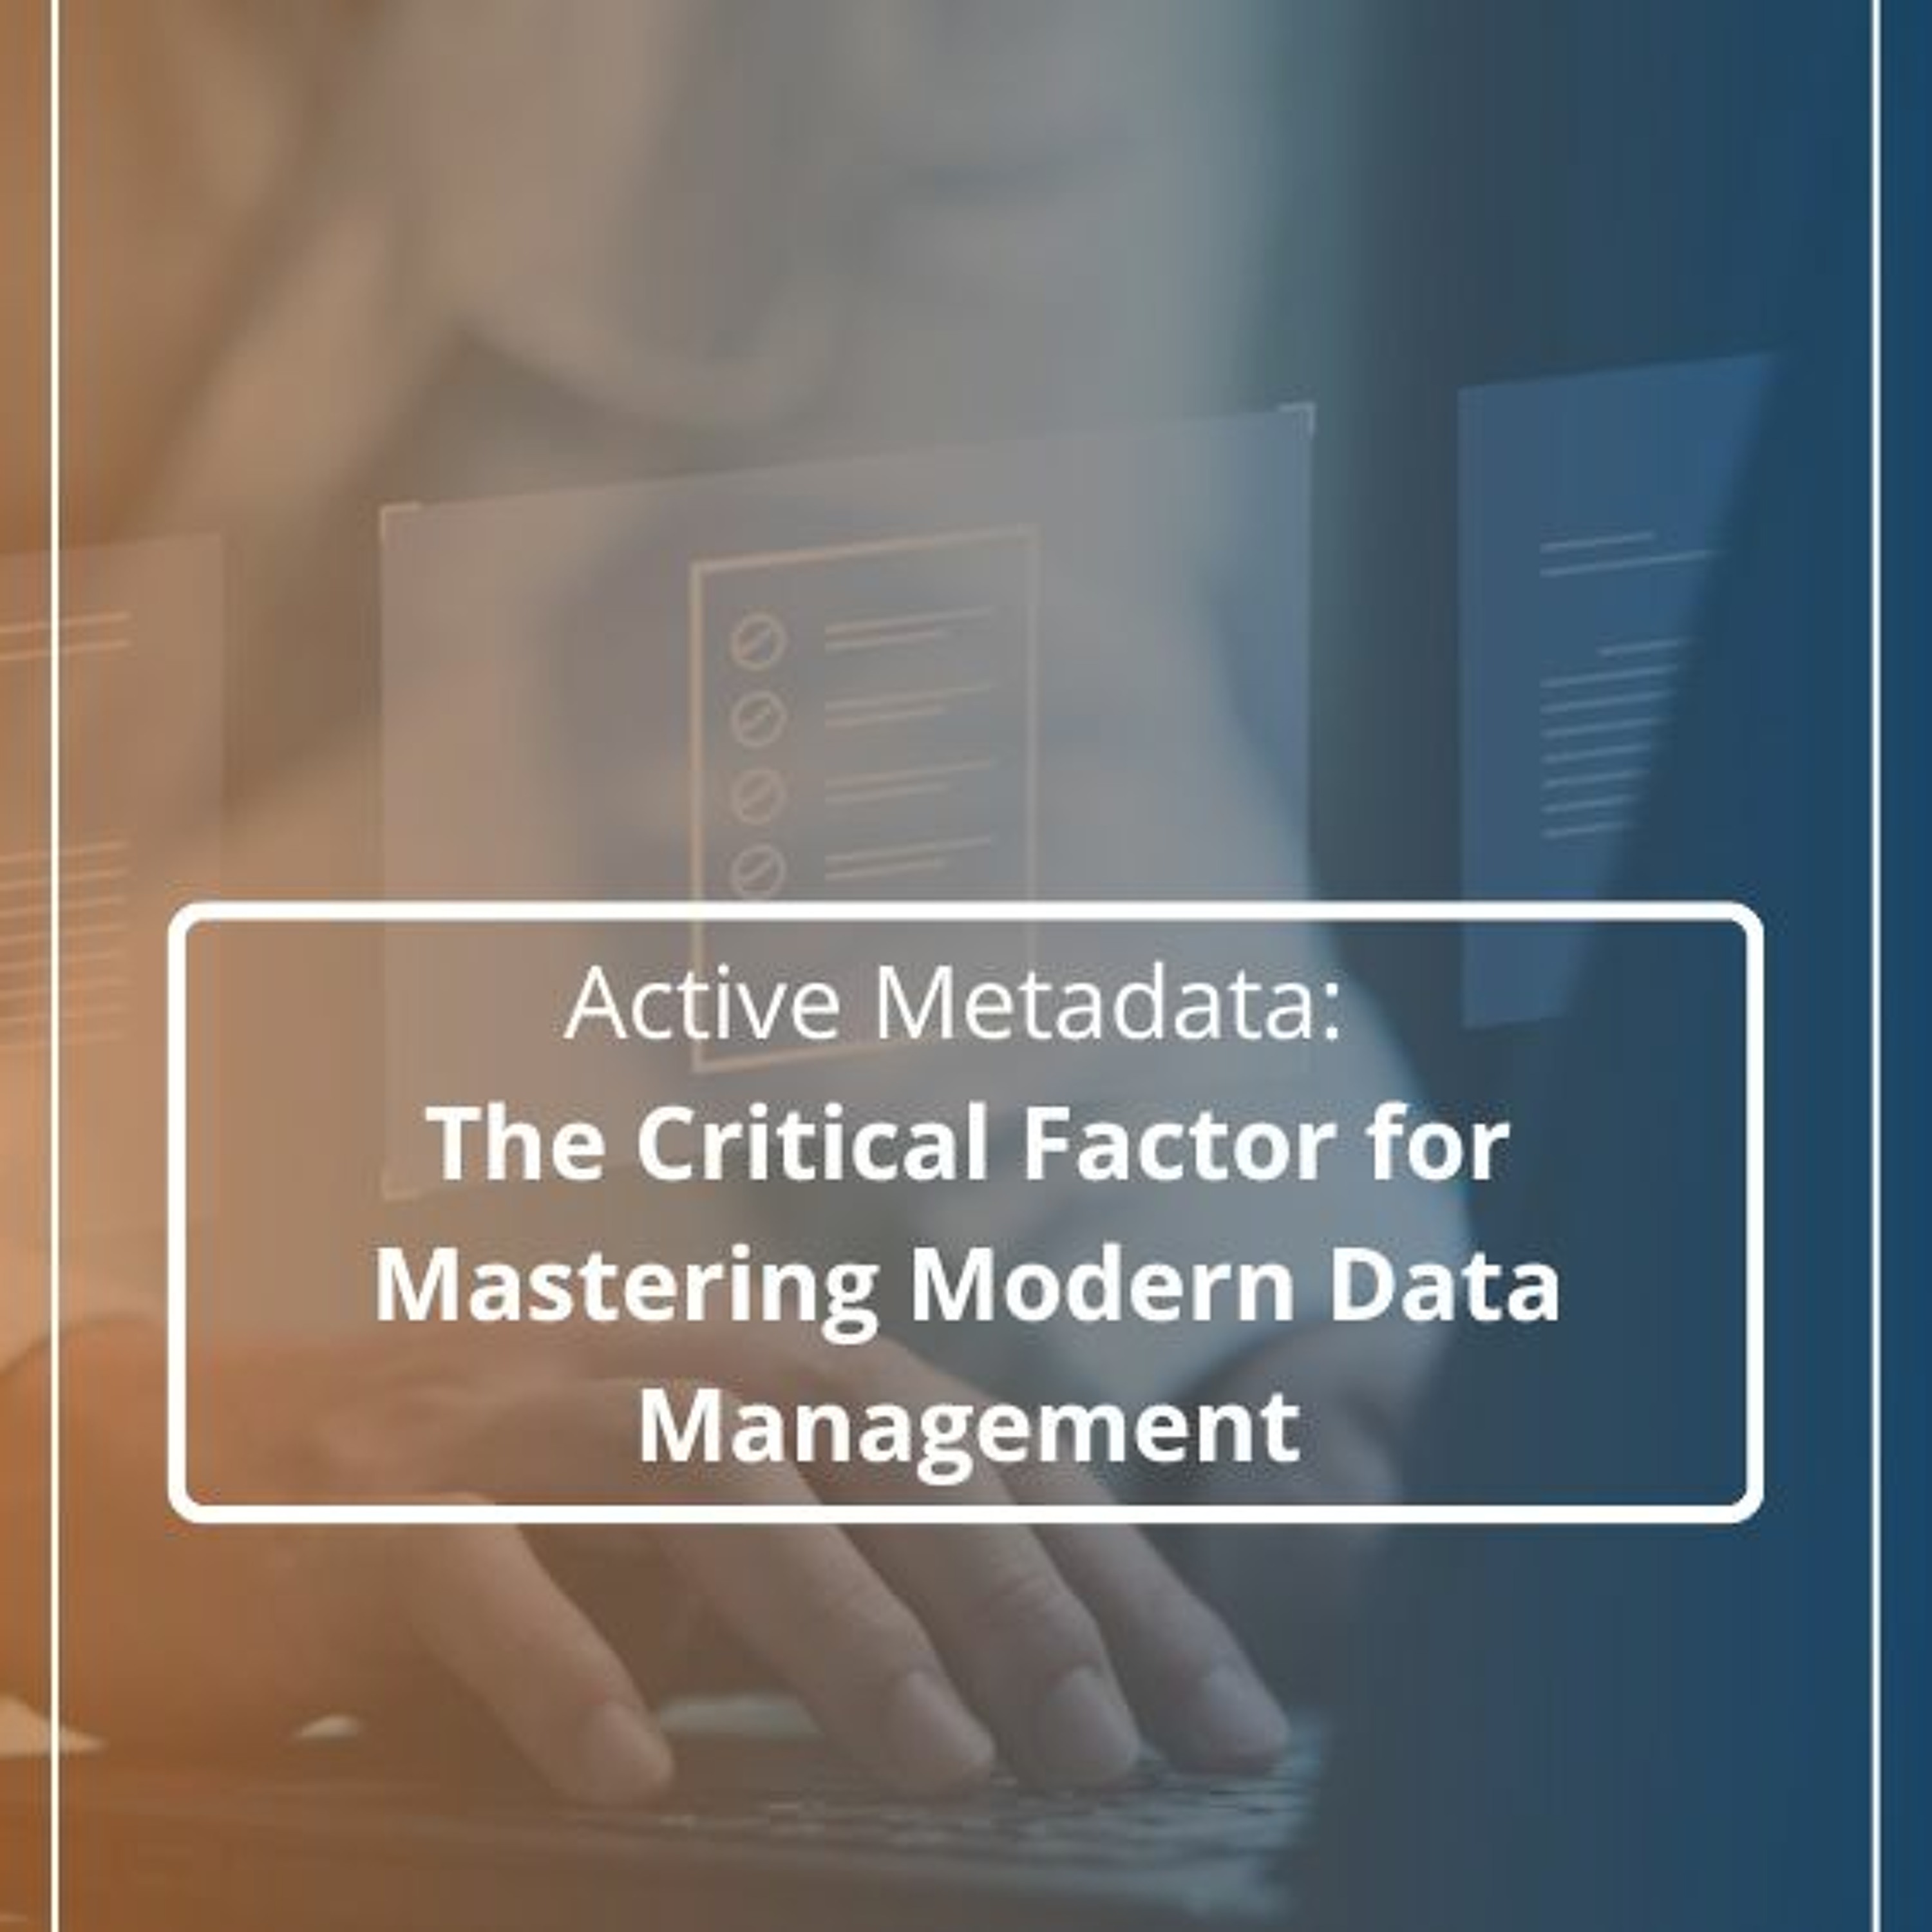 Active Metadata: The Critical Factor for Mastering Modern Data Management - Audio Blog